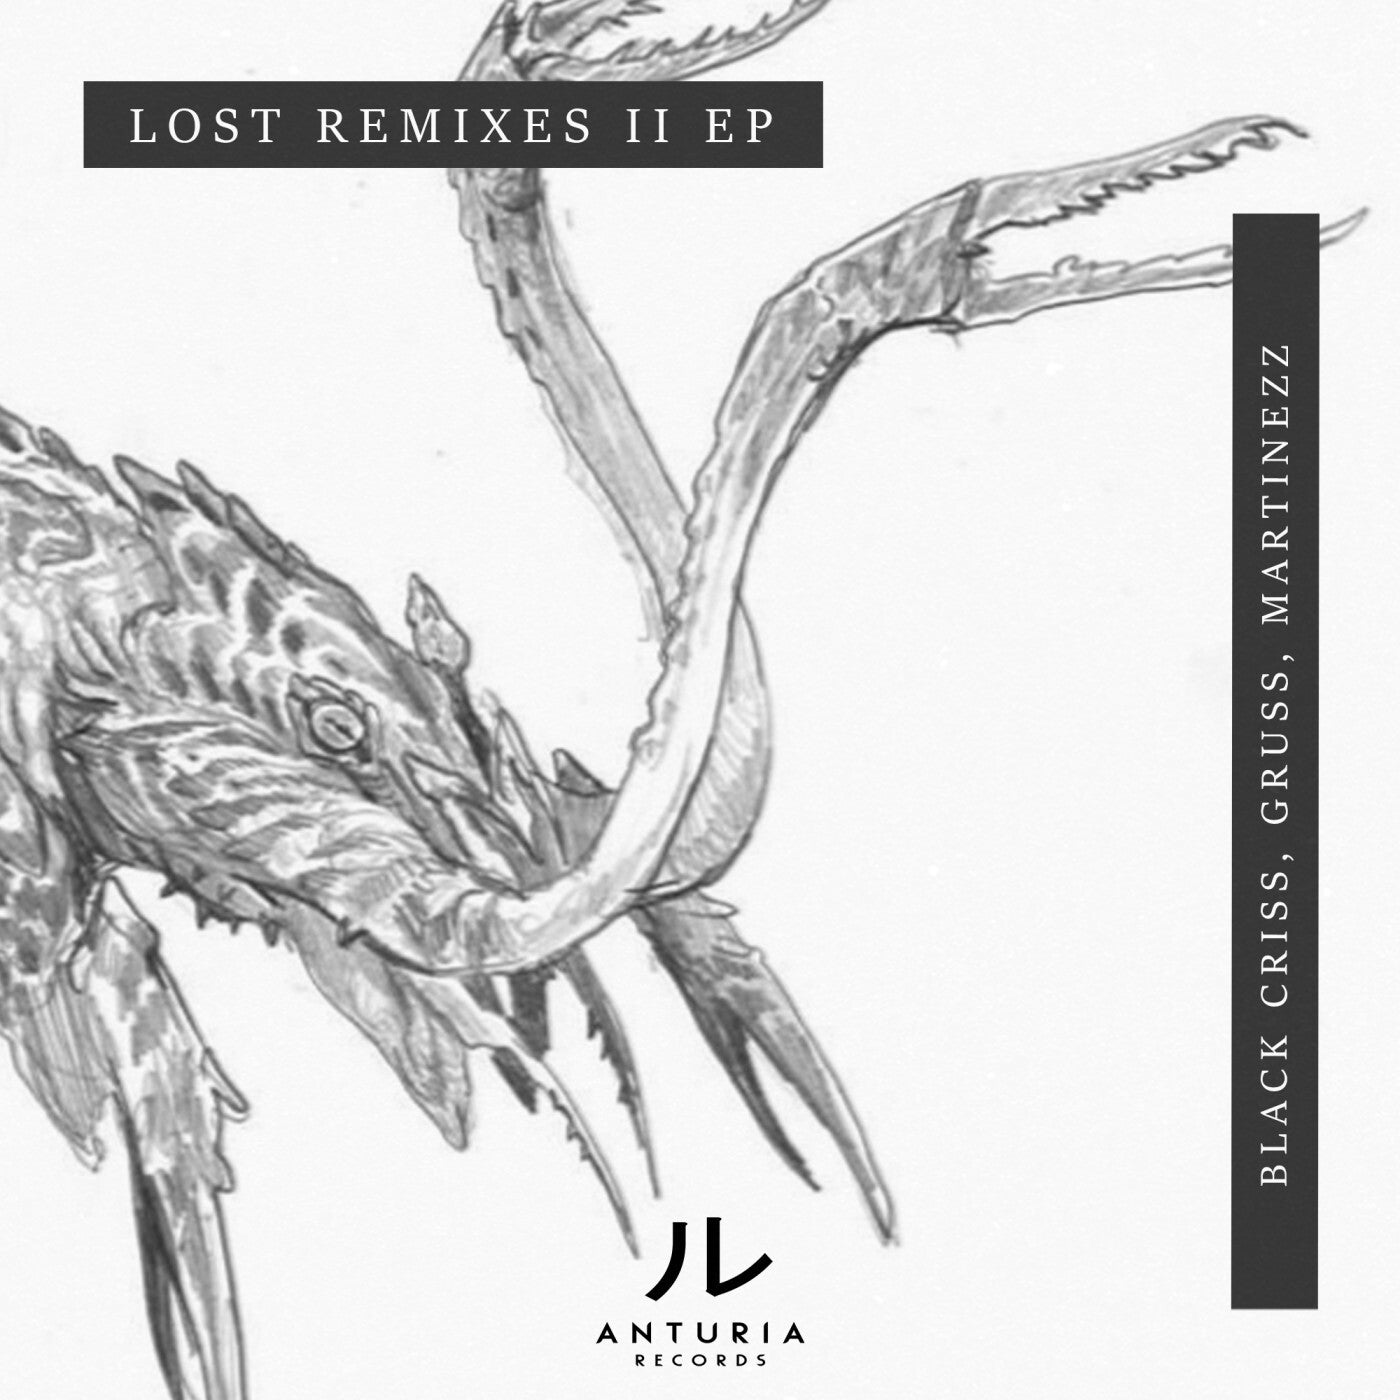 Lost Remixes II EP